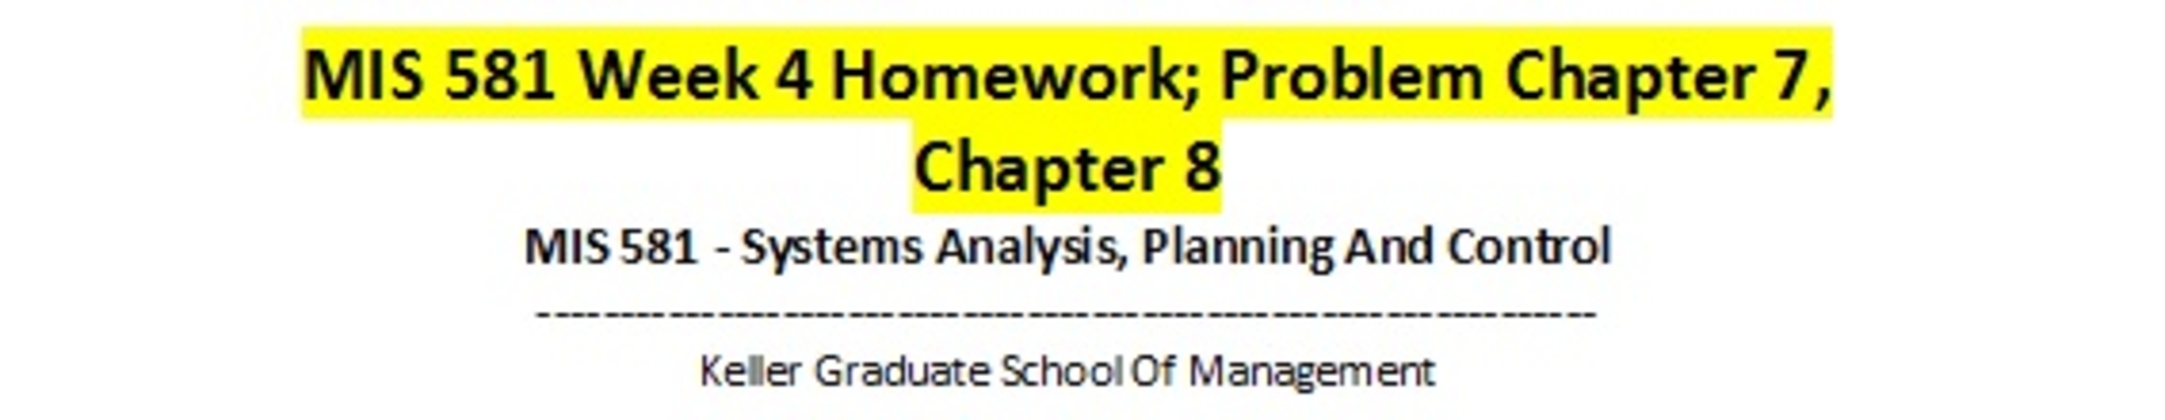 MIS 581 Week 4 Homework; Problem Chapter 7, Chapter 8